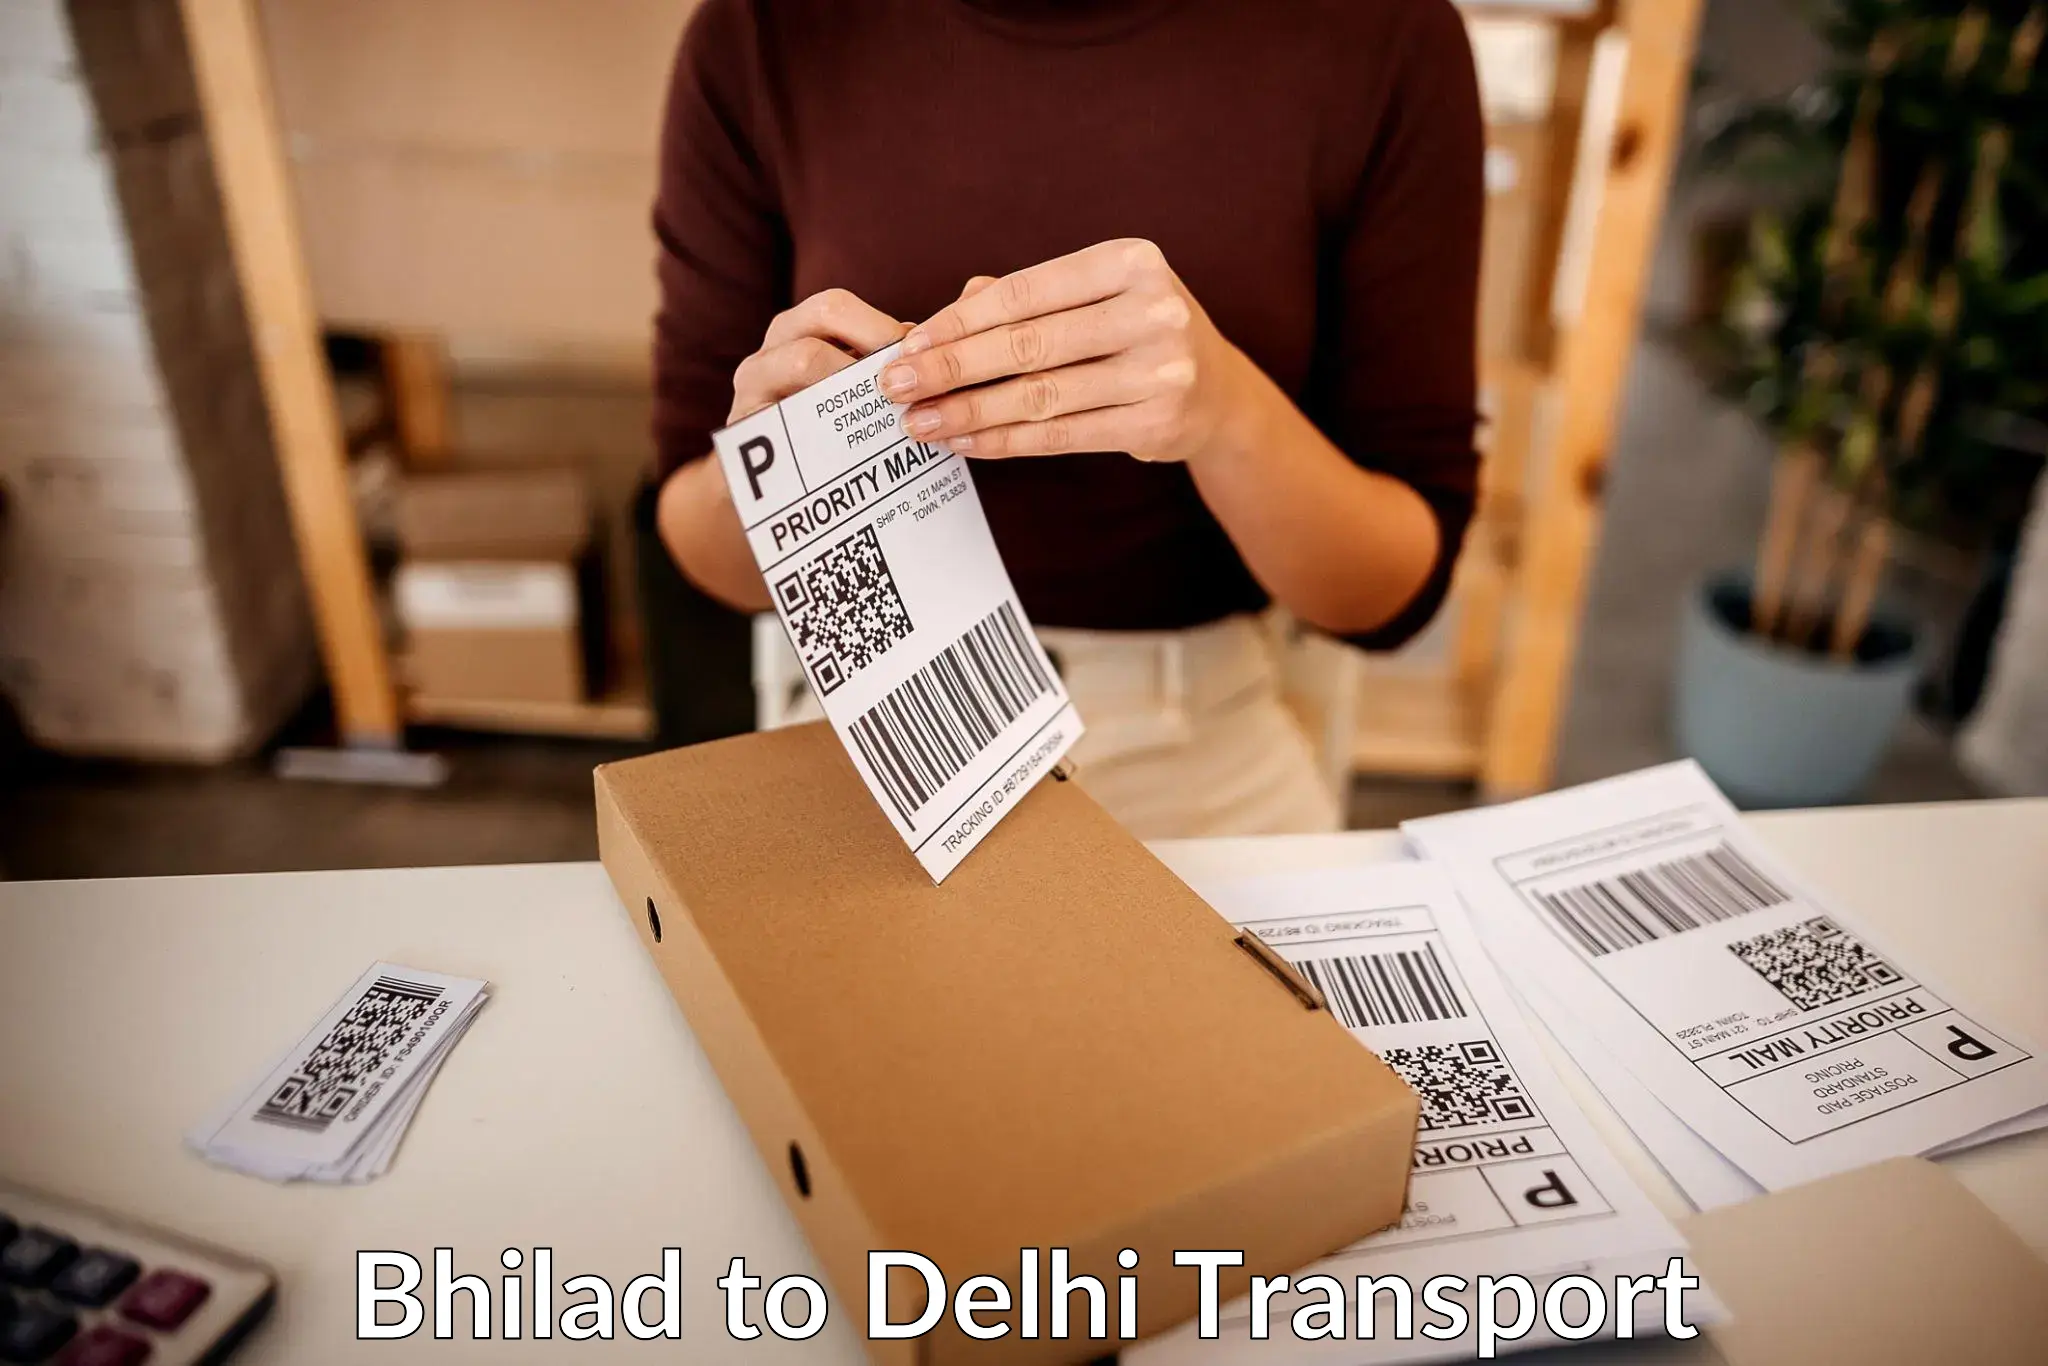 Shipping partner Bhilad to Lodhi Road